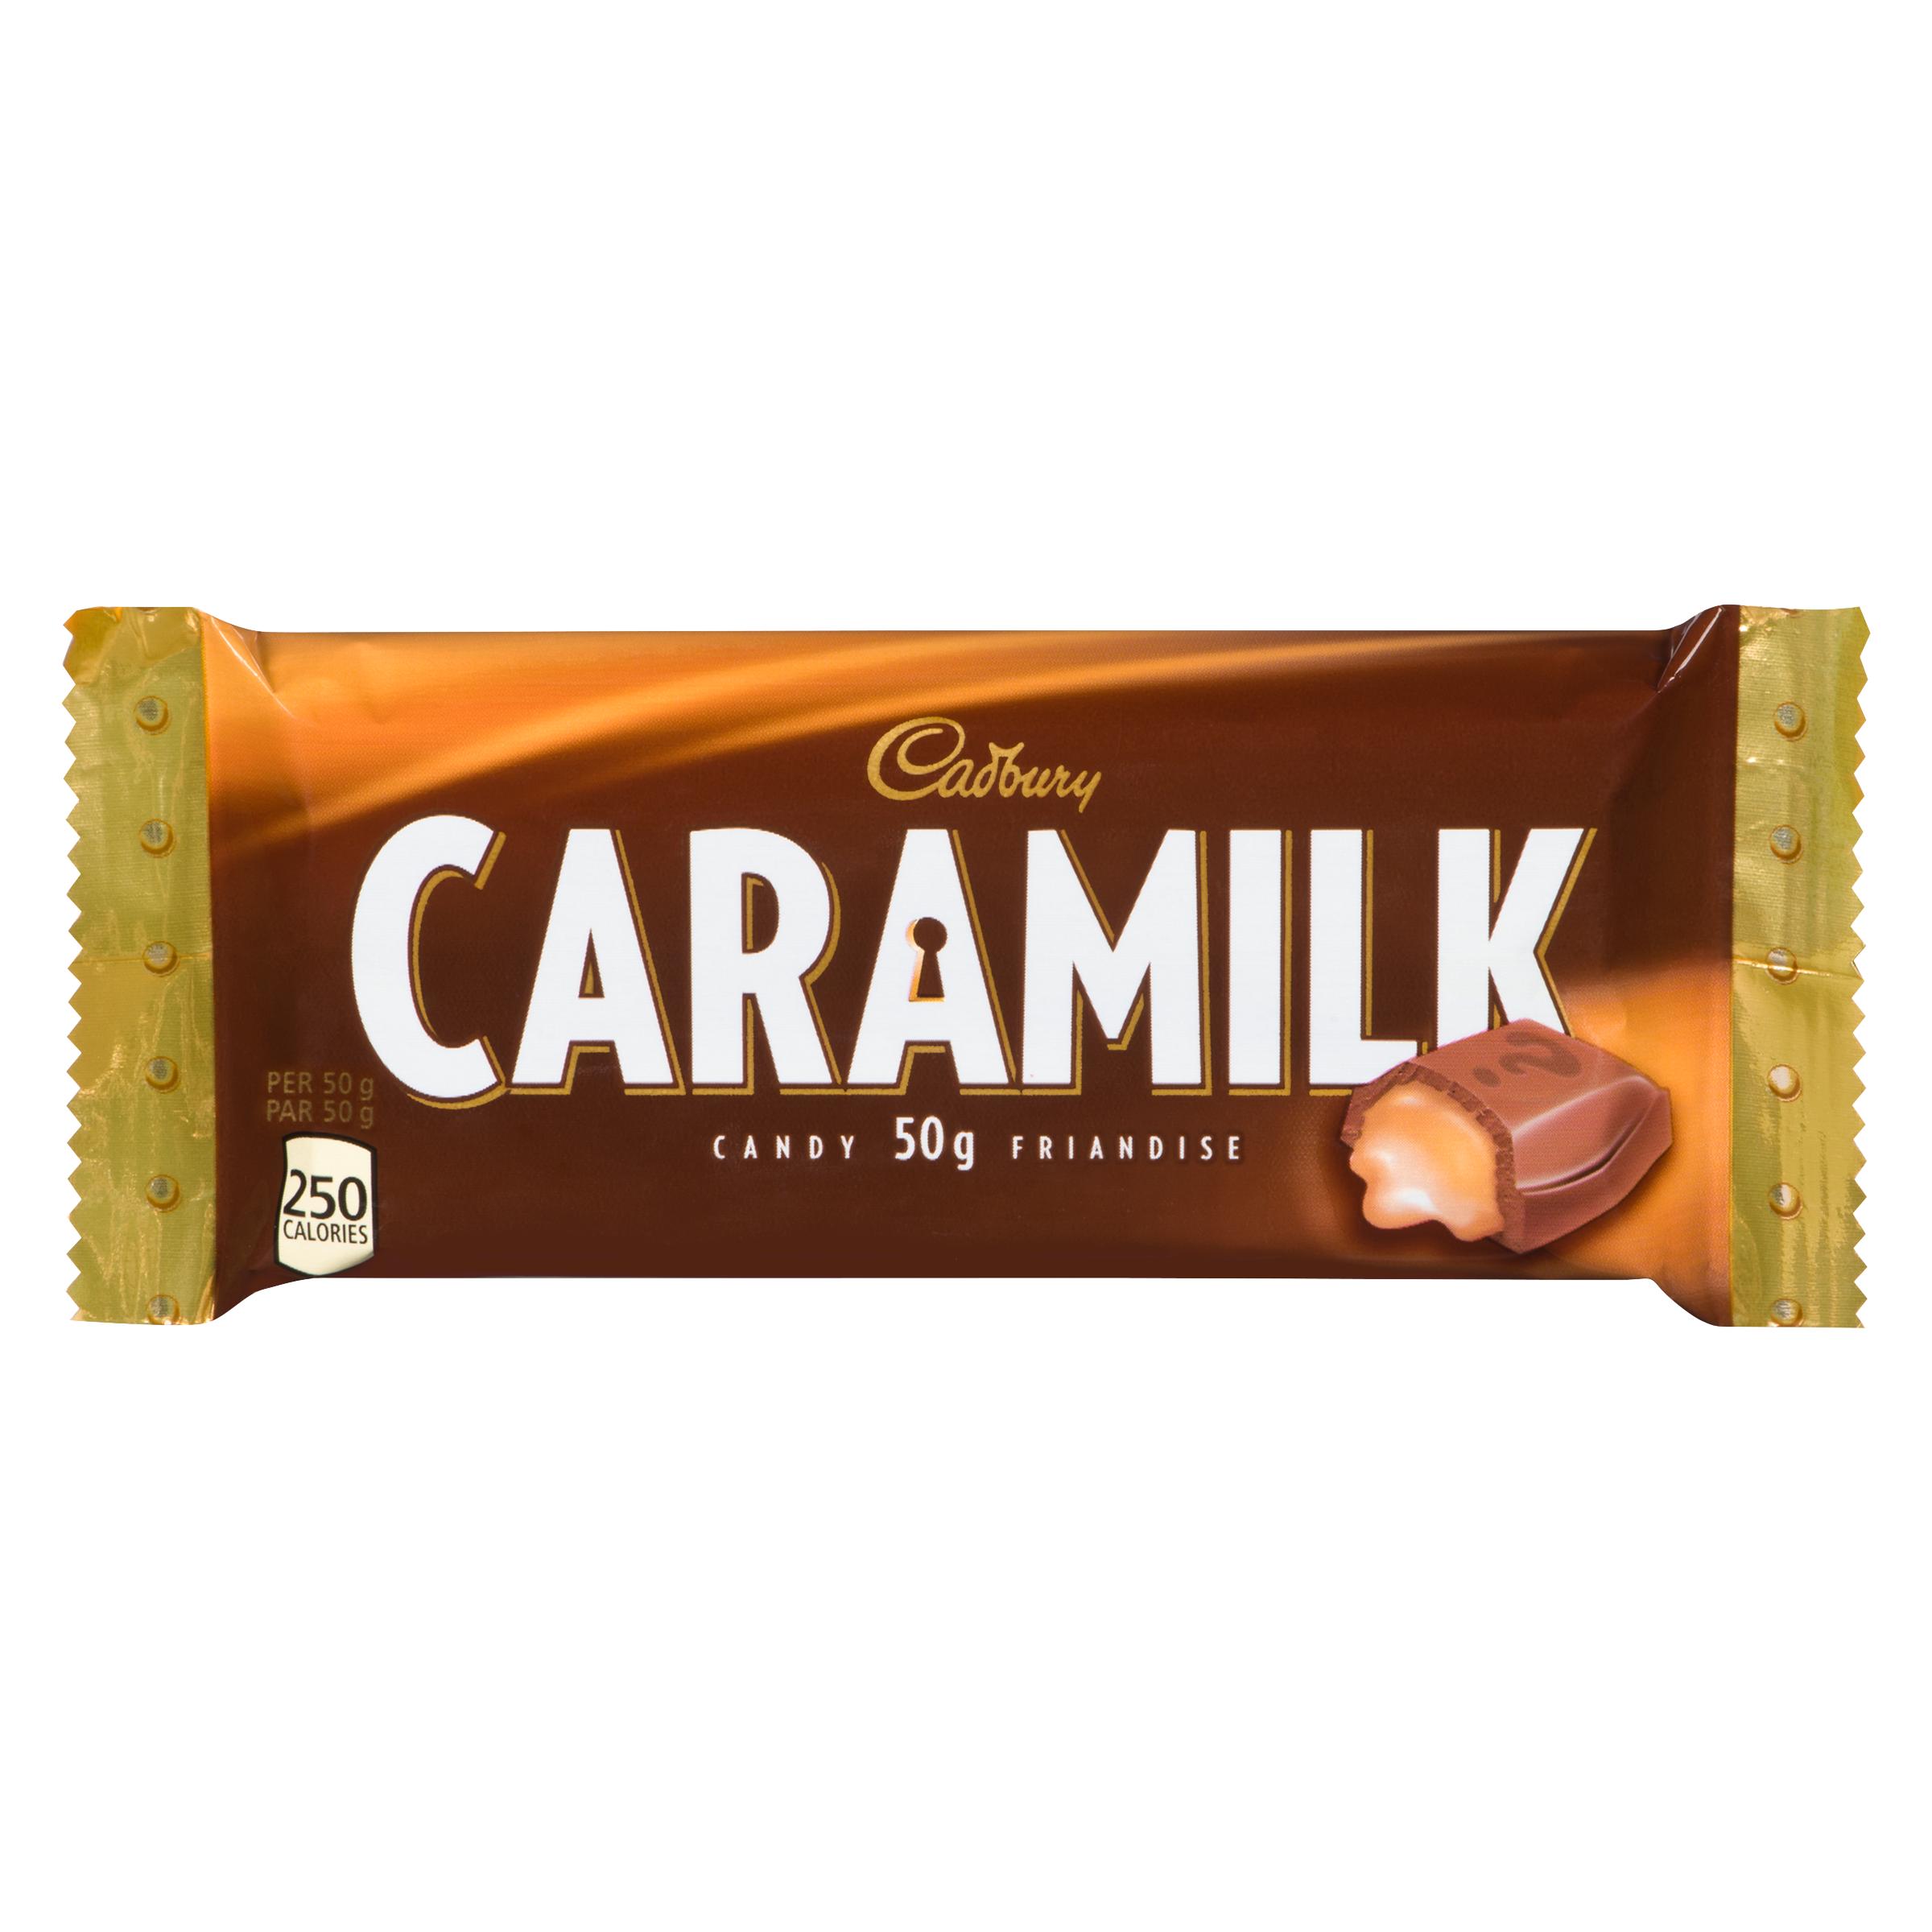 Cadbury Caramilk Regular 50 g Candy